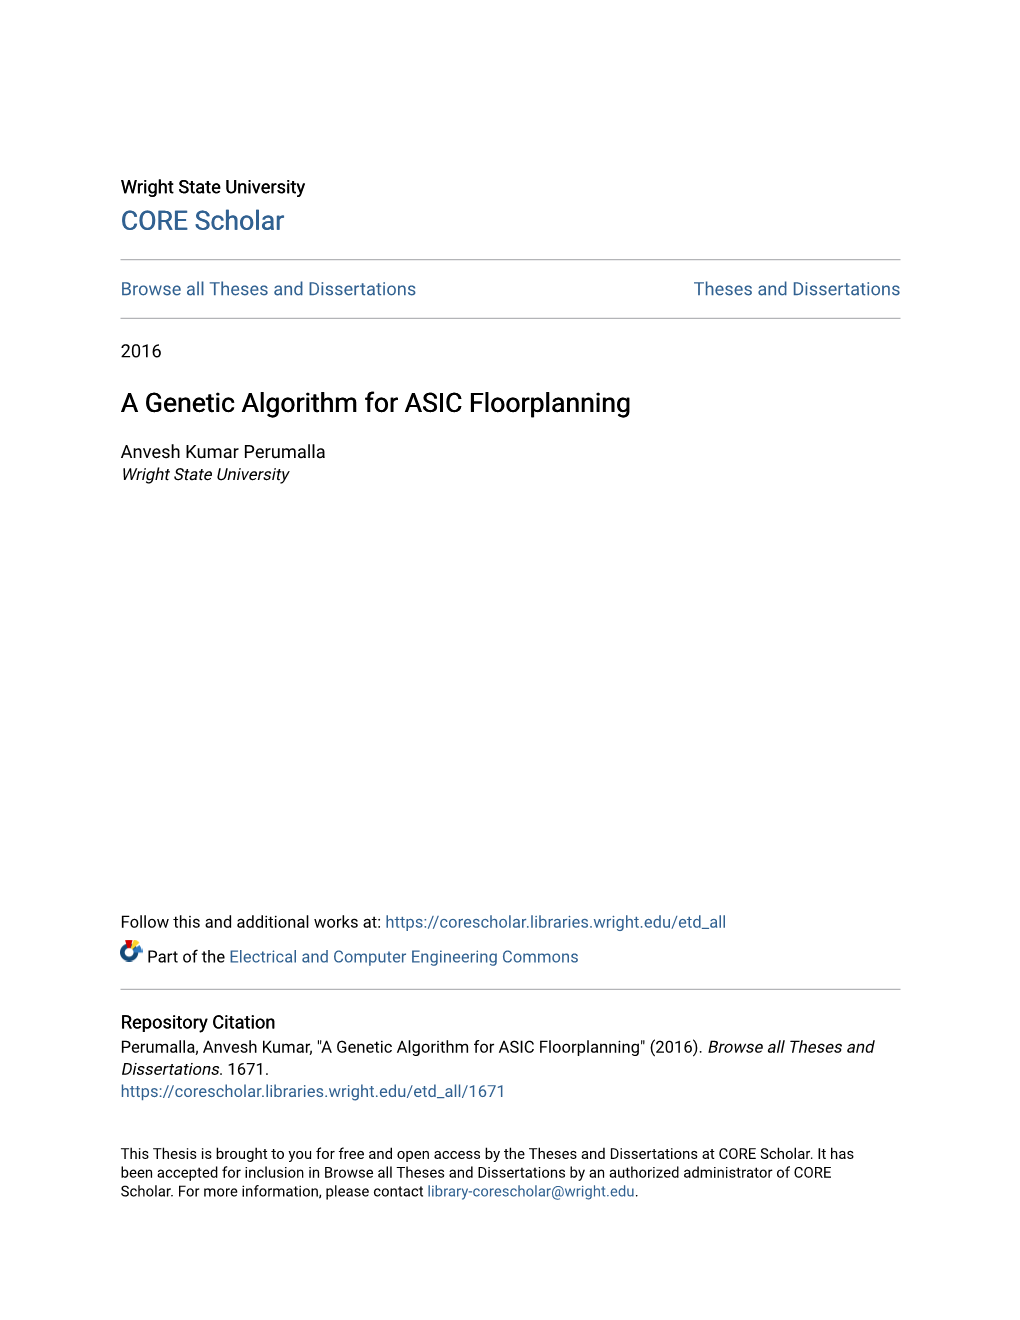 A Genetic Algorithm for ASIC Floorplanning